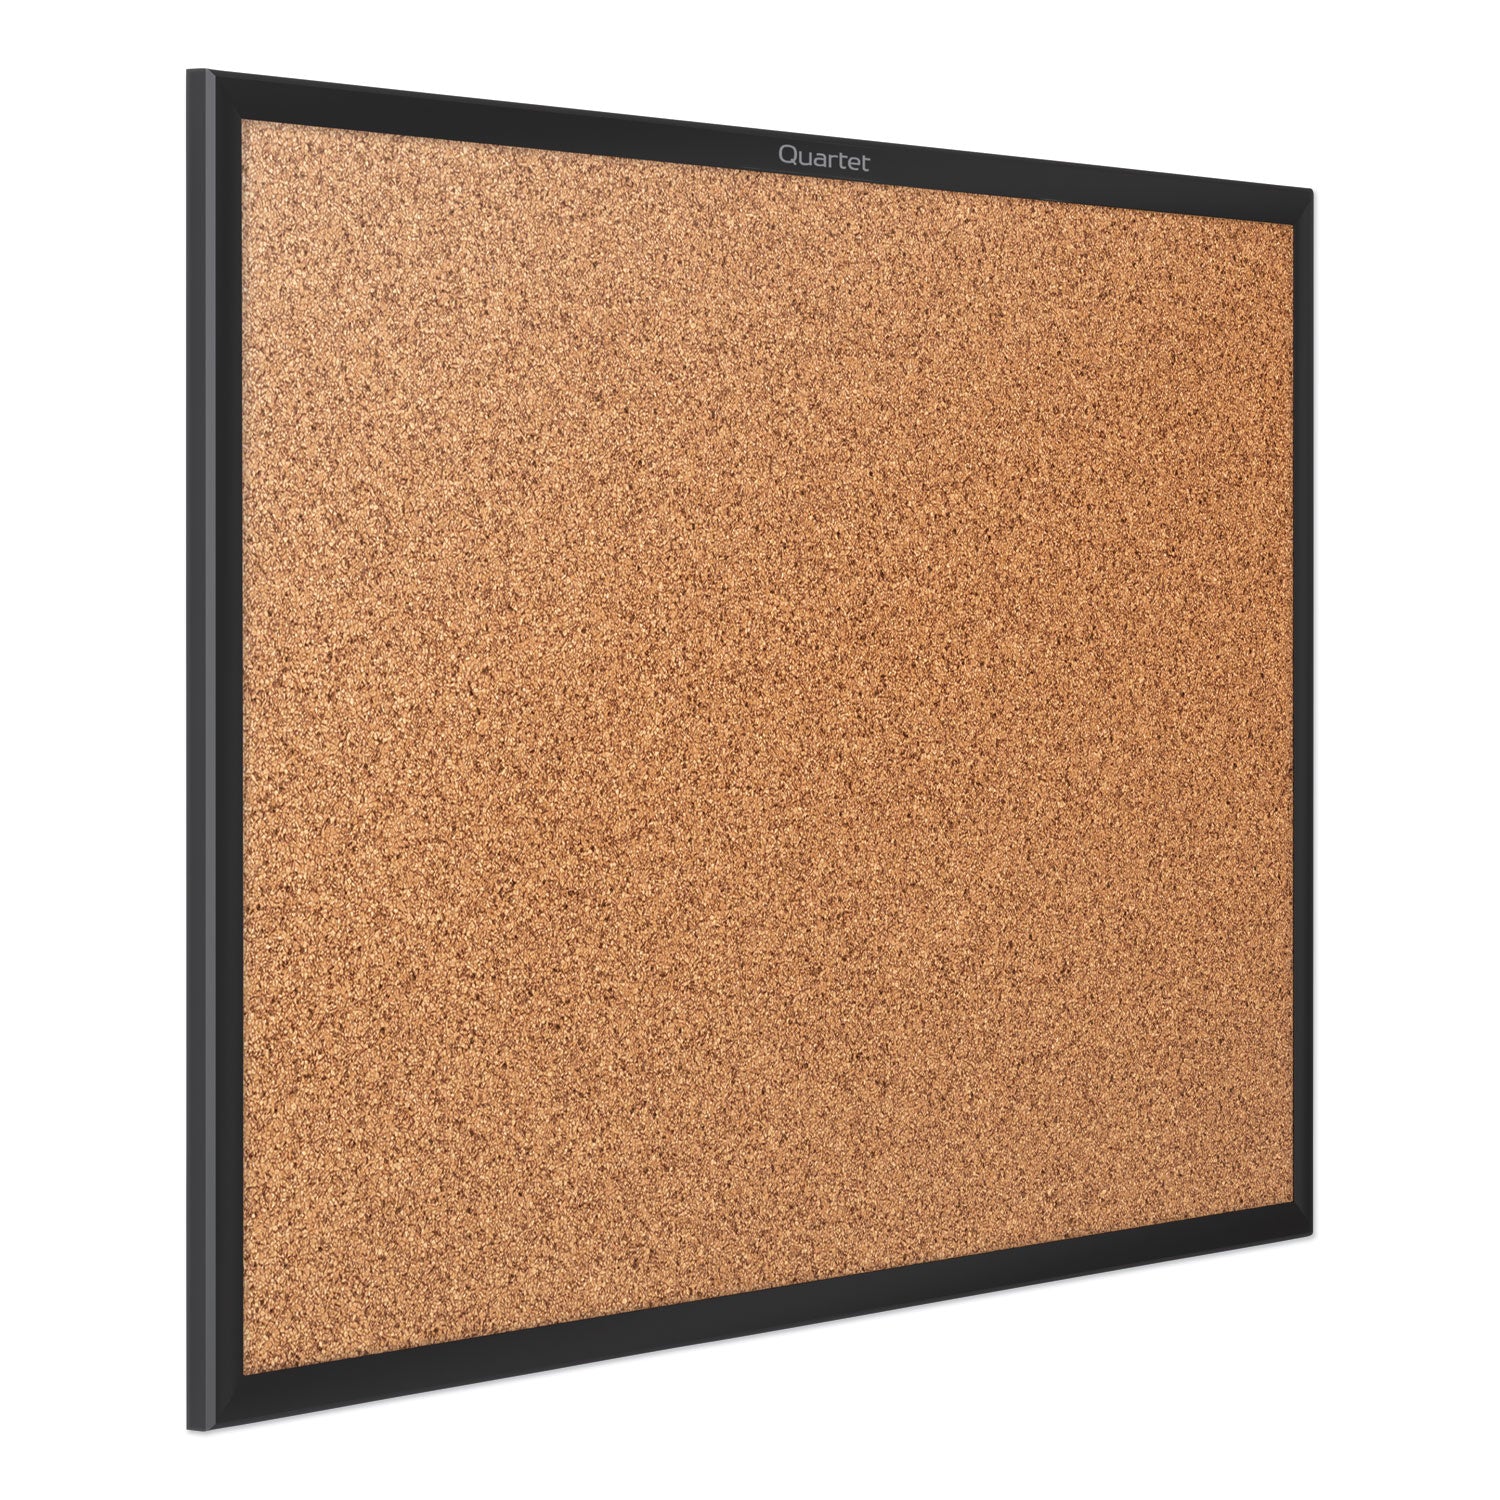 Classic Series Cork Bulletin Board, 36 x 24, Tan Surface, Black Aluminum Frame - 